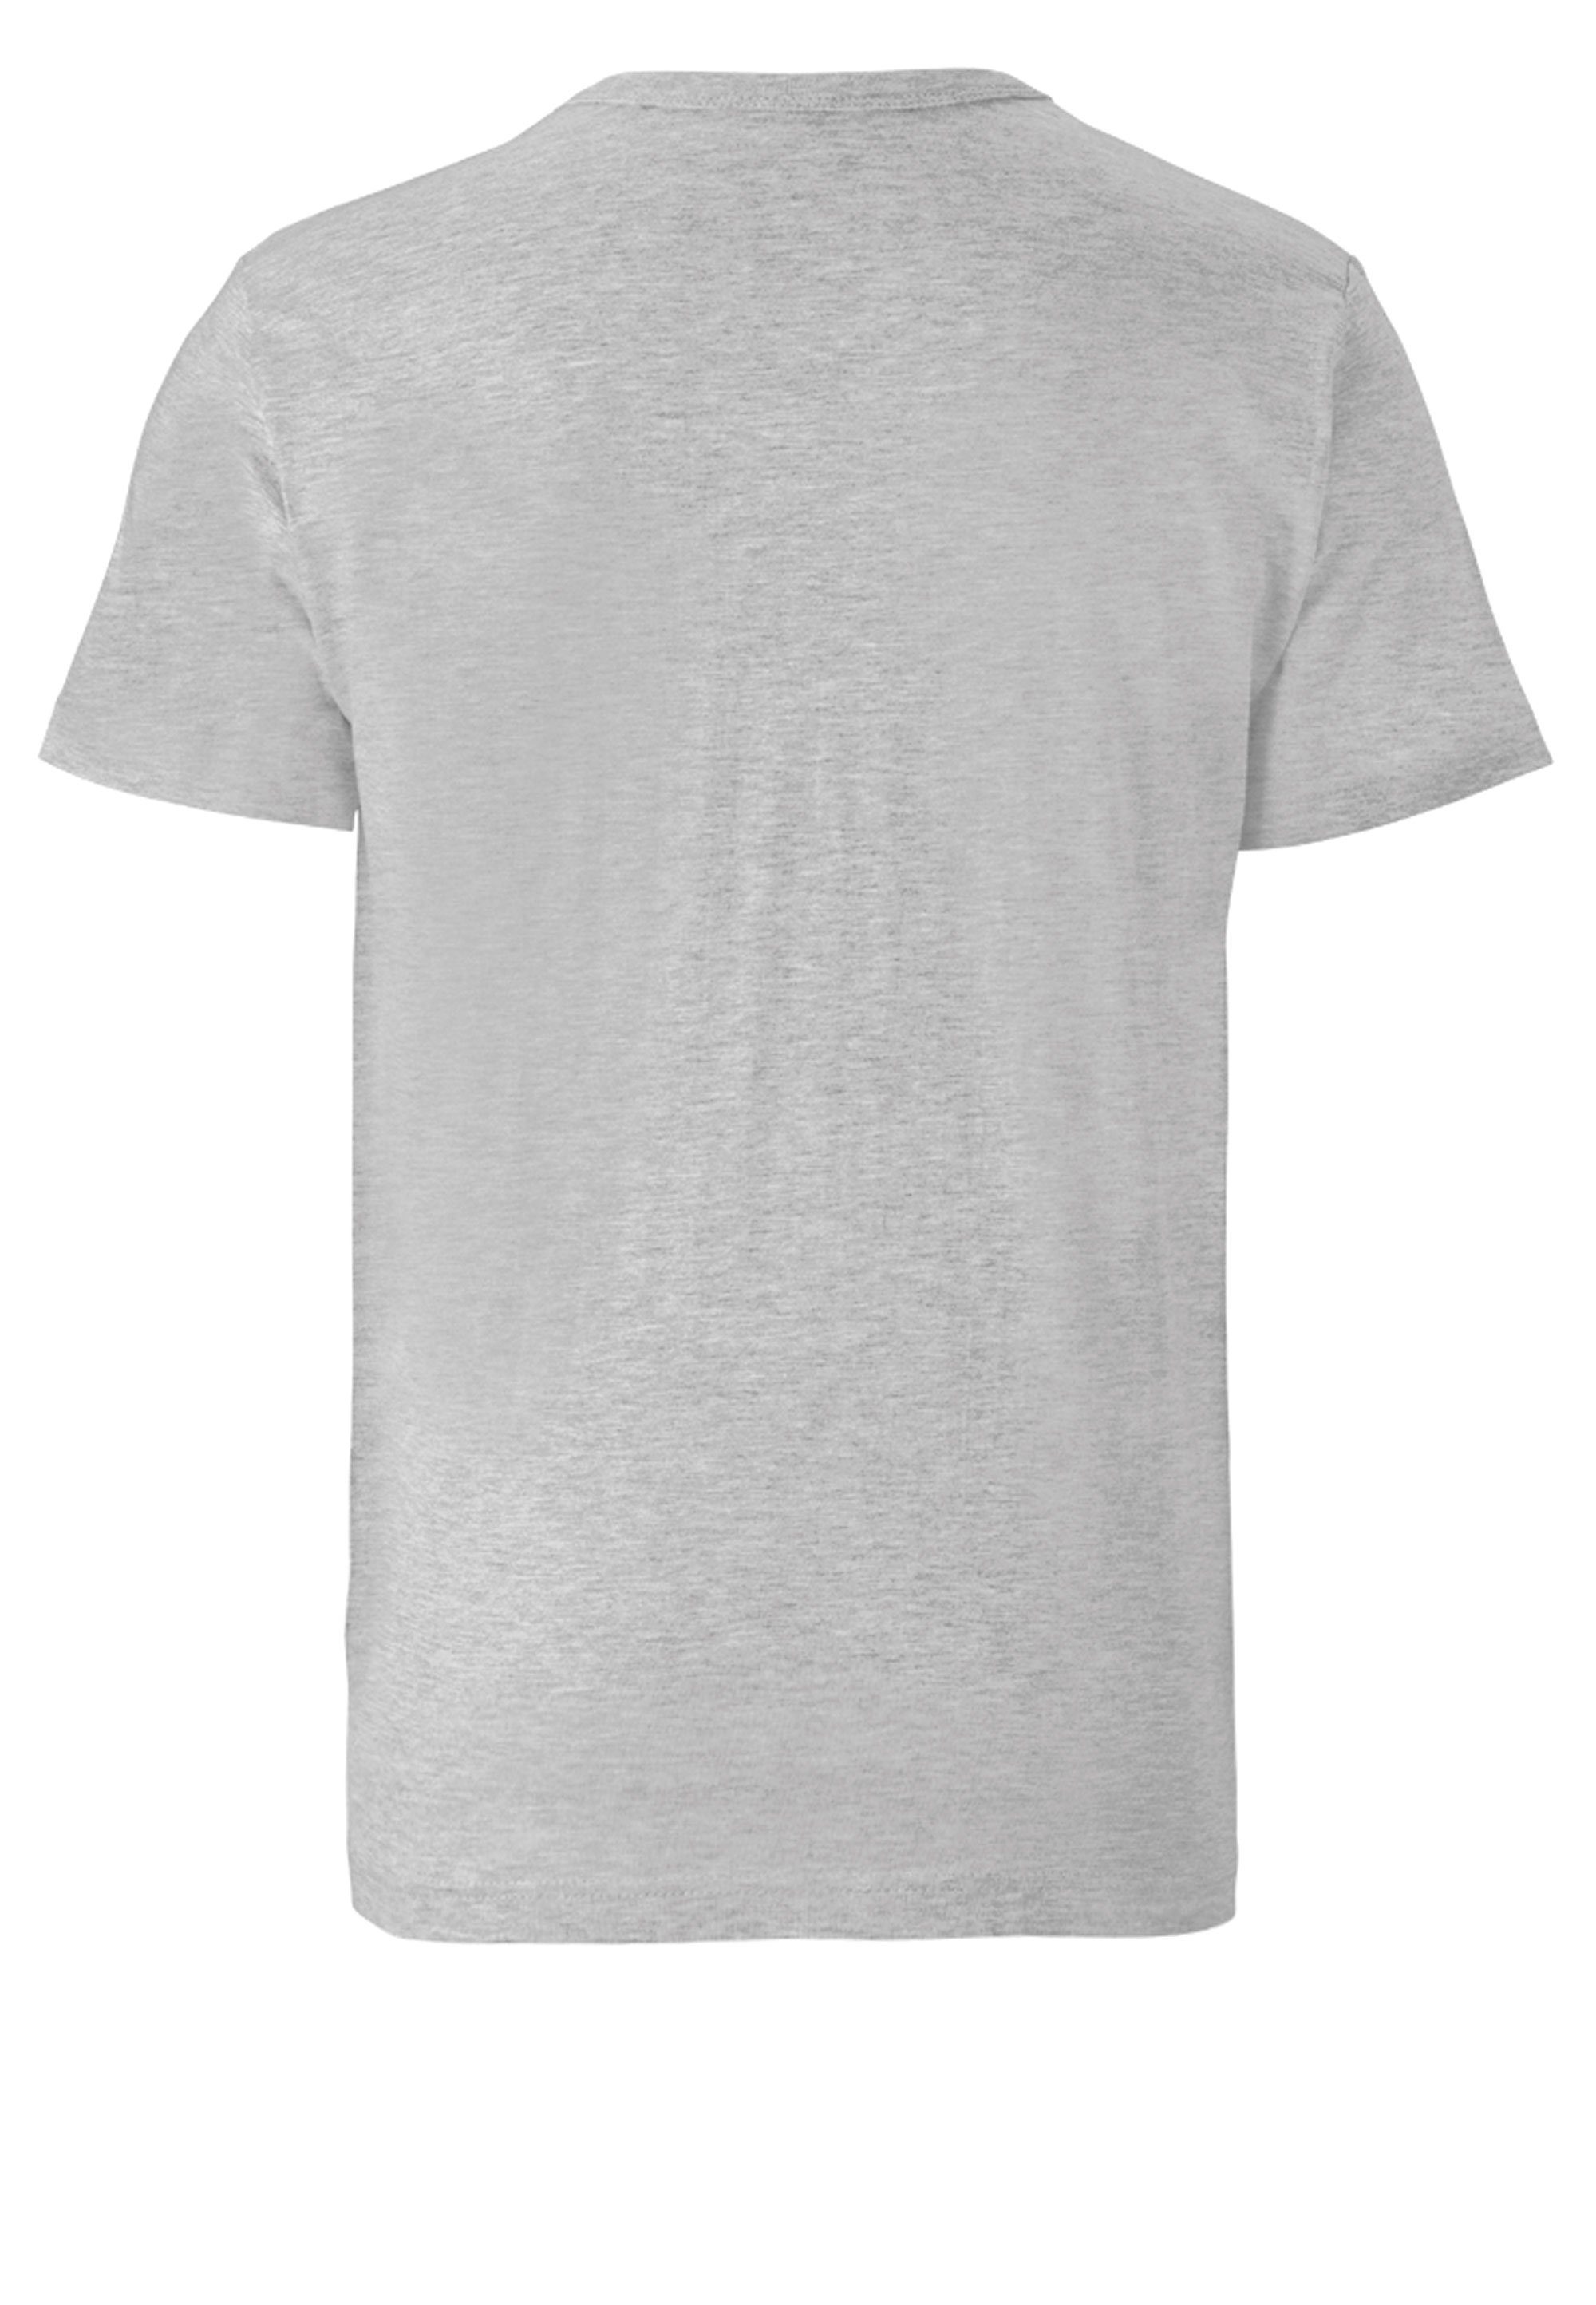 Krümelmonster LOGOSHIRT Sesamstrasse Originalddesign lizenziertem T-Shirt mit grau-meliert -